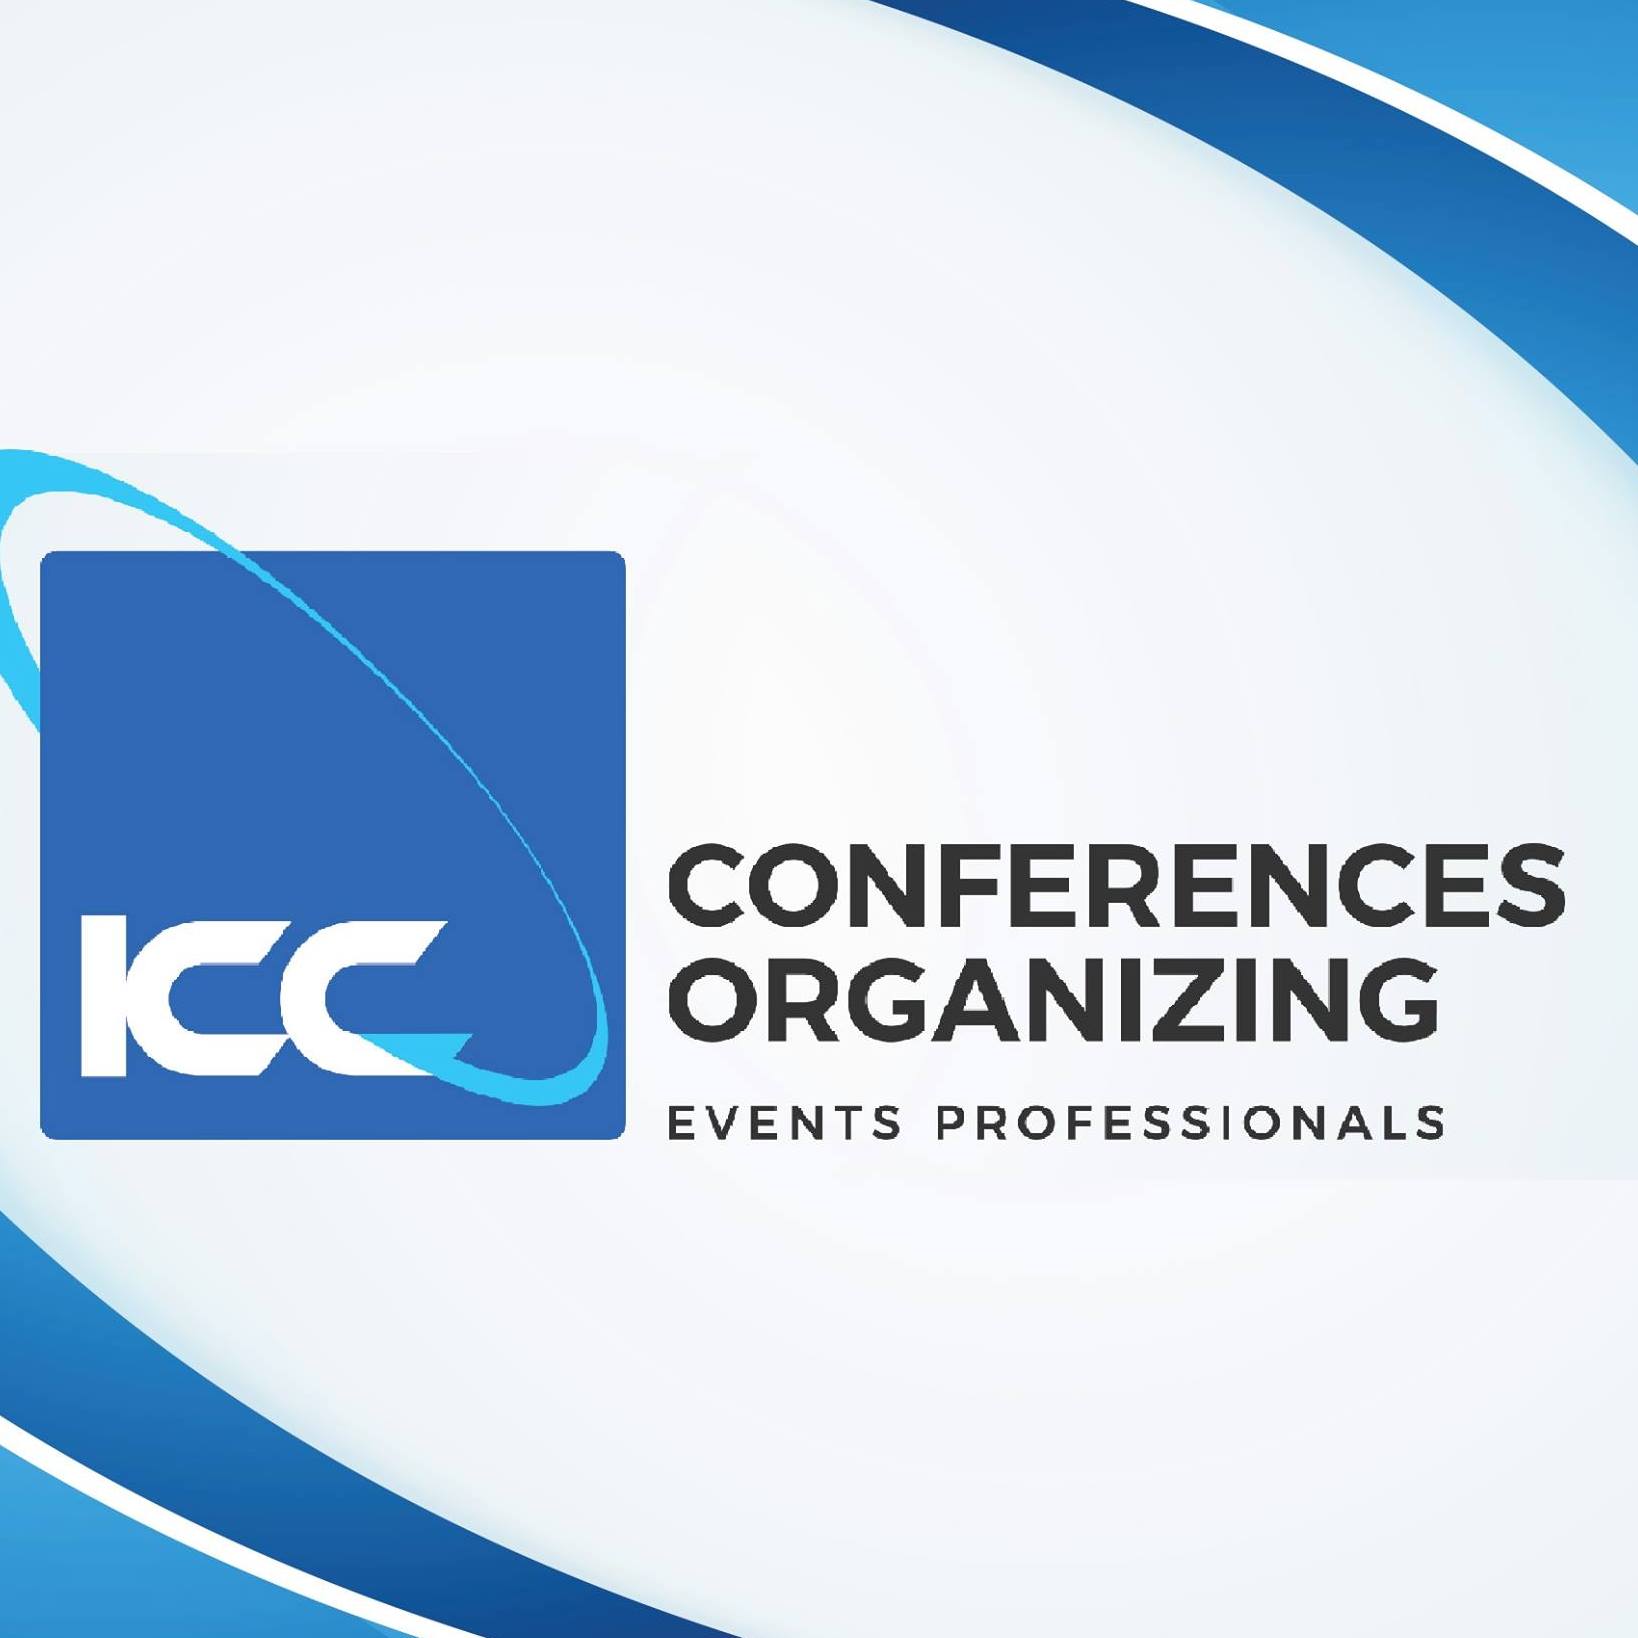 ICC Conferences Organizing